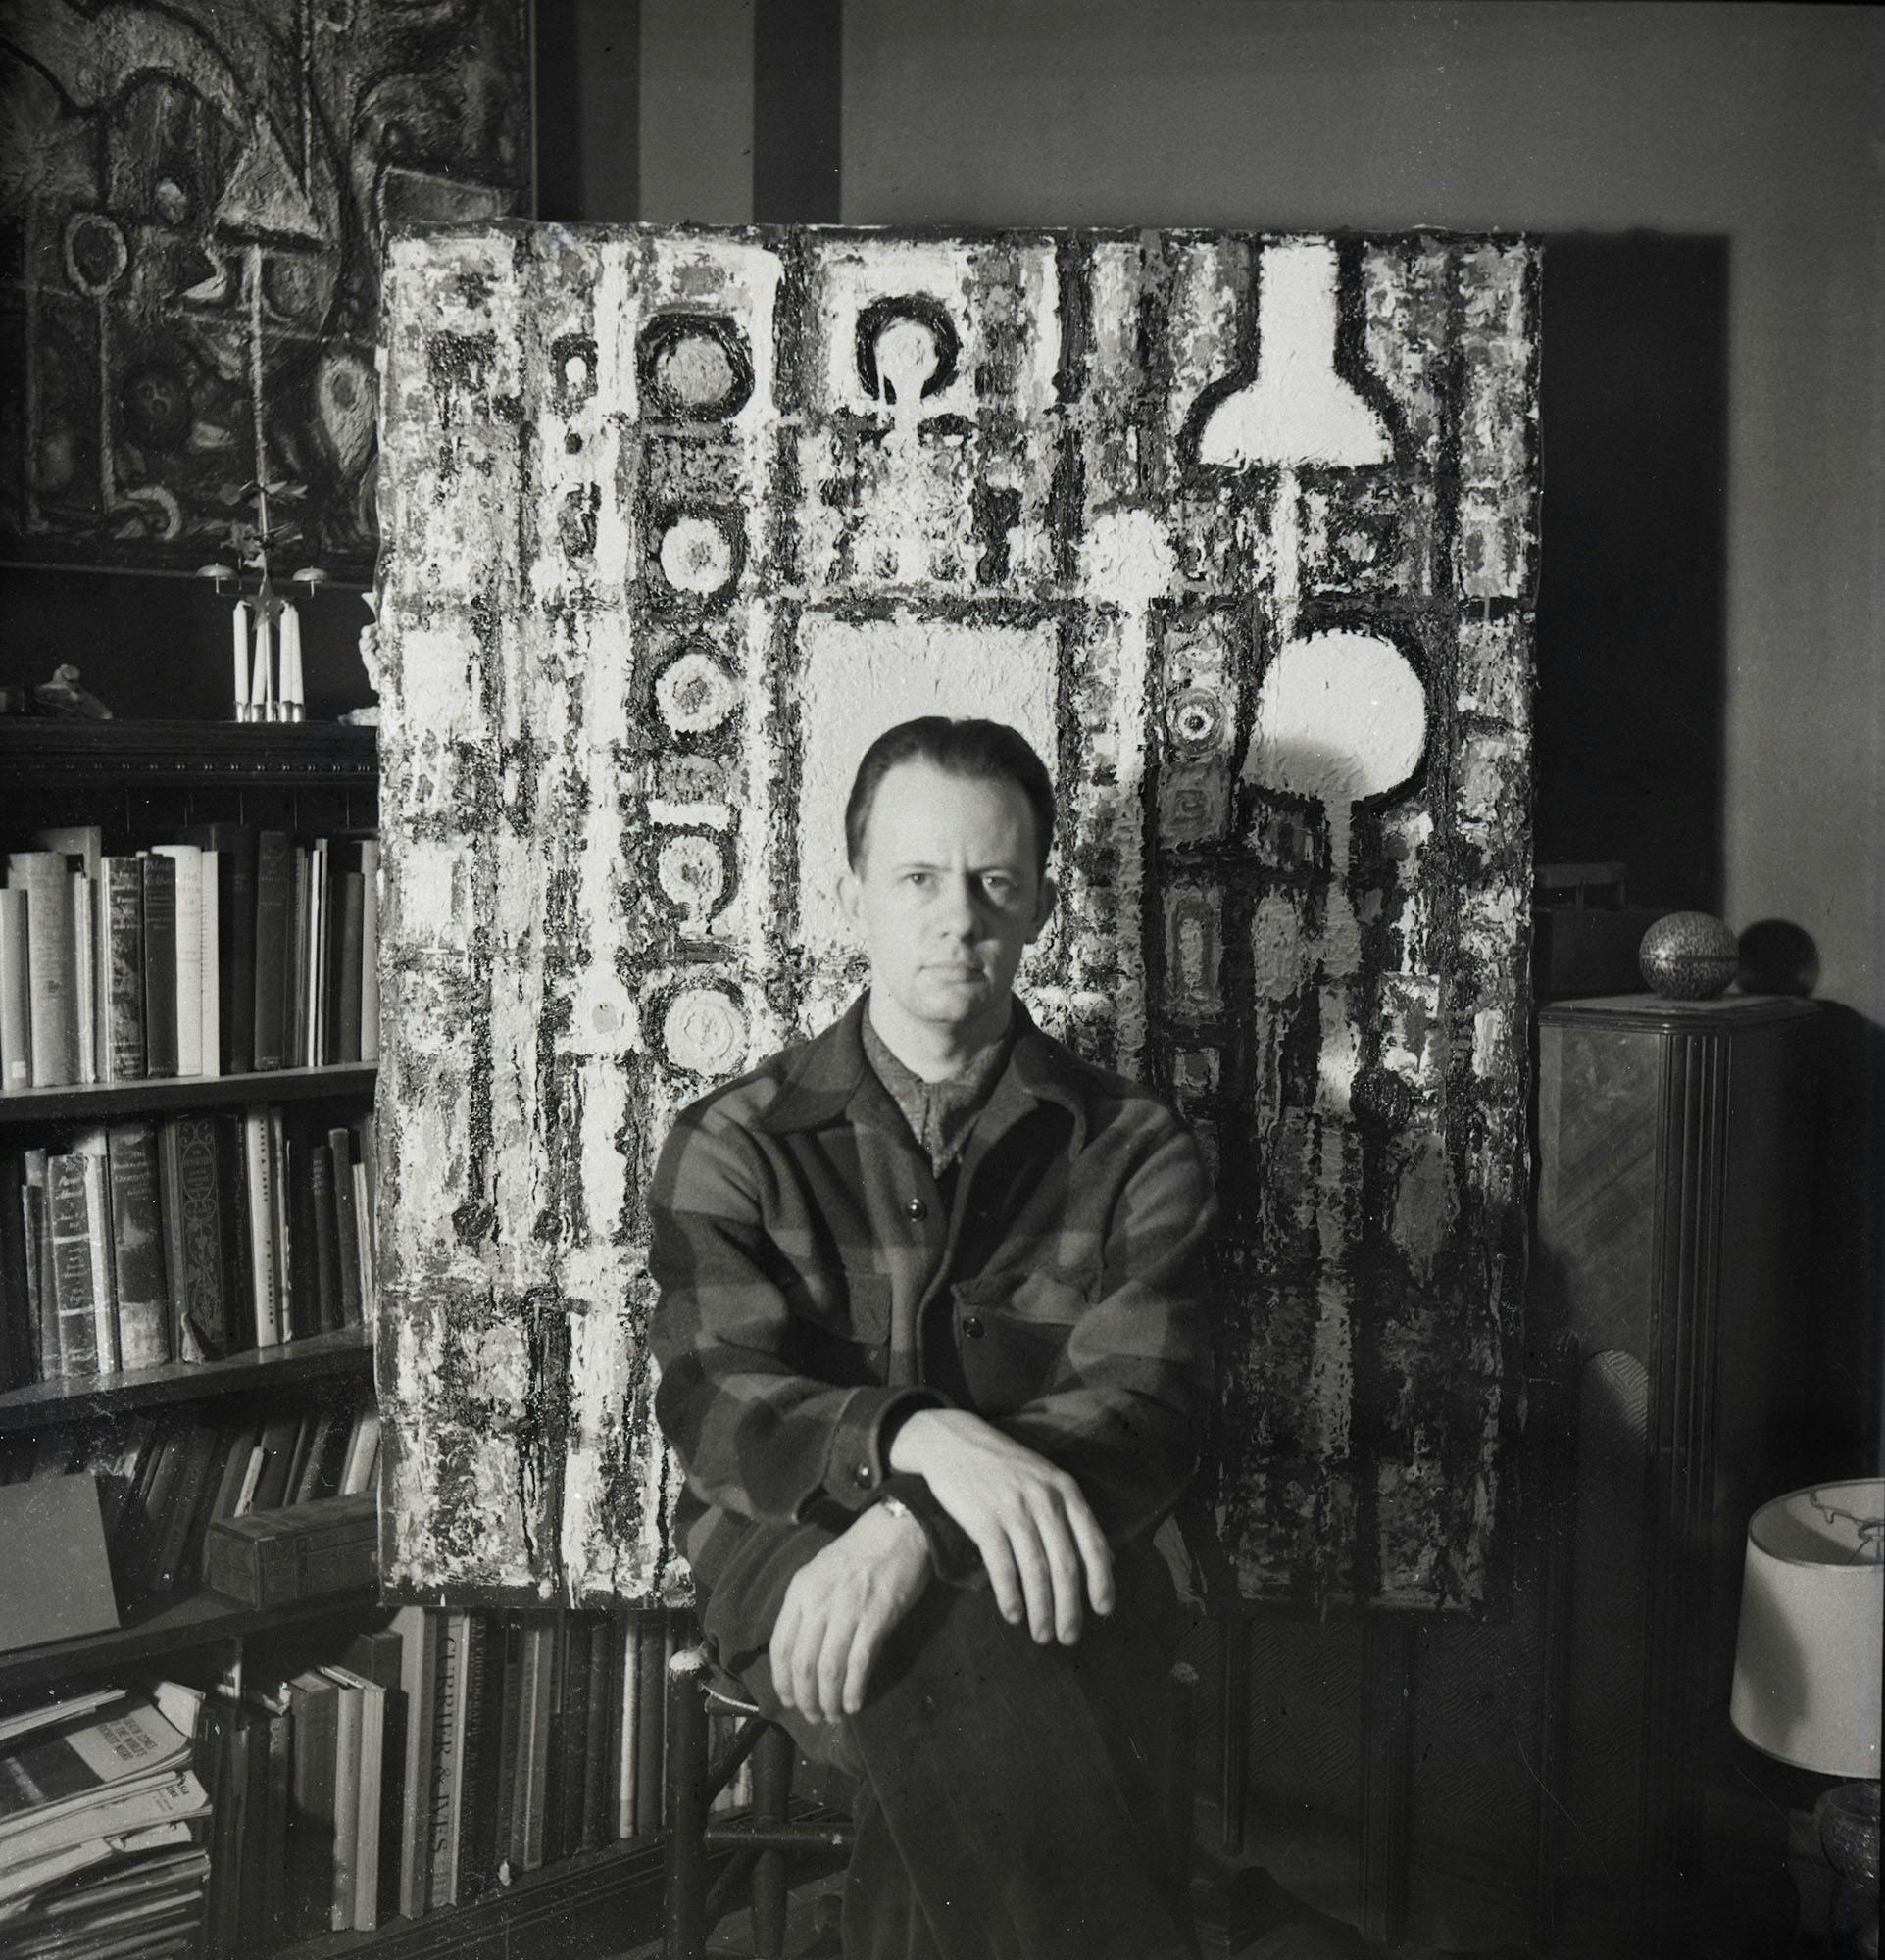 Richard Pousette-Dart, Self-portrait, Sloatsburg, NY, c. 1953. – The Richard Pousette-Dart Foundation